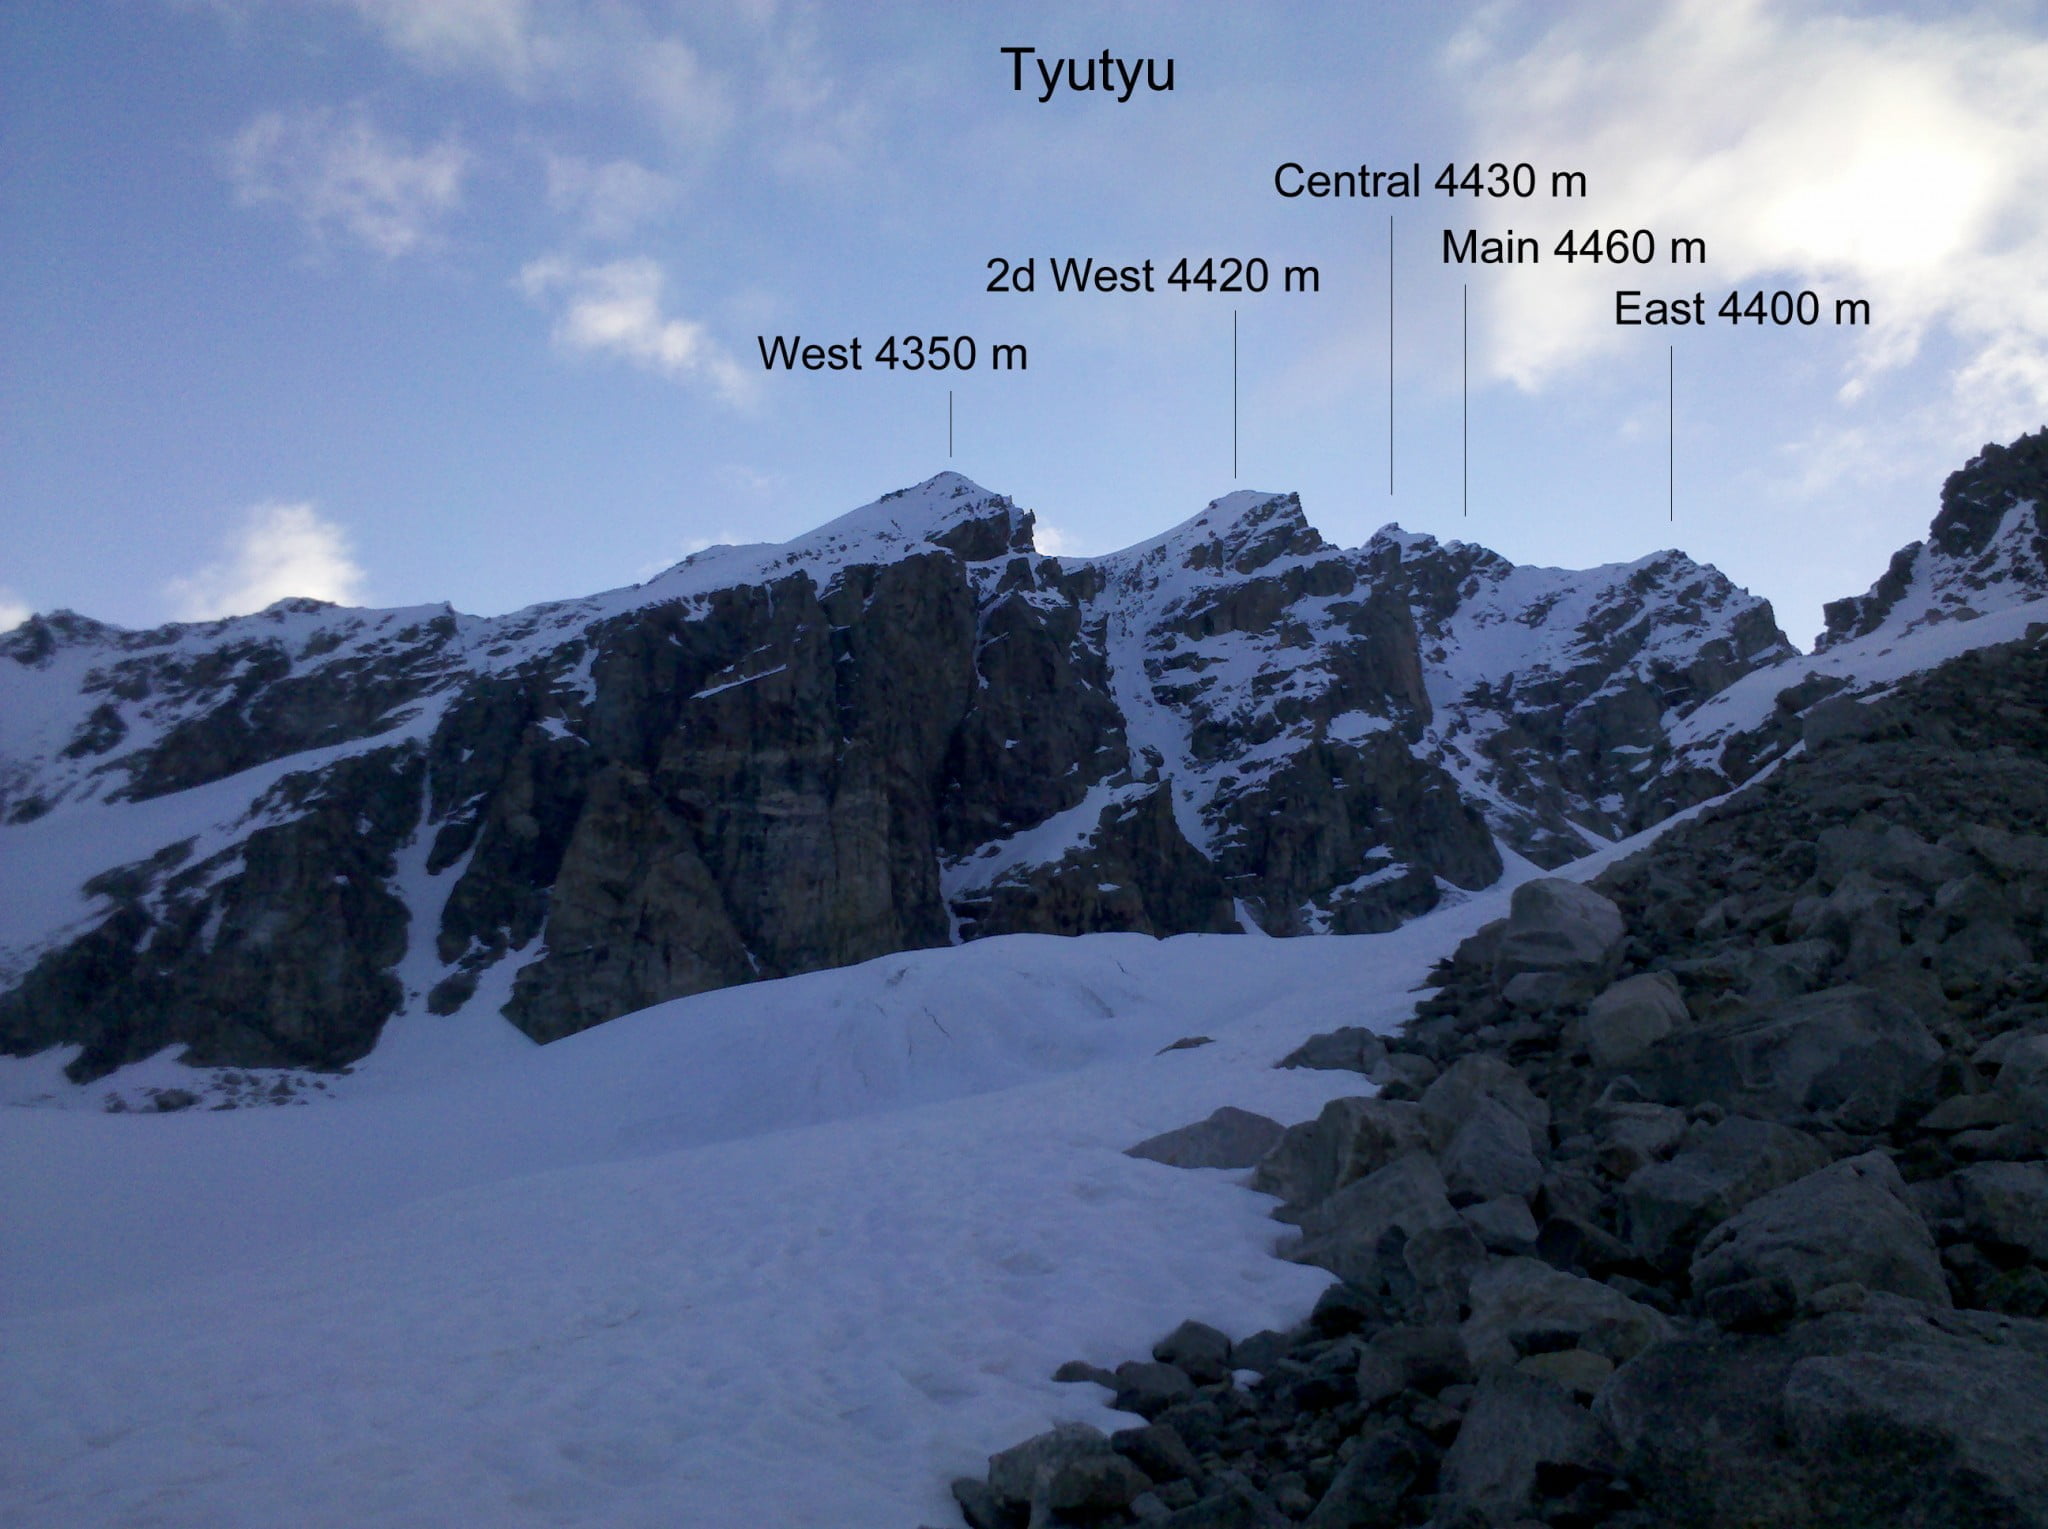 Massif of Tyutyu from south